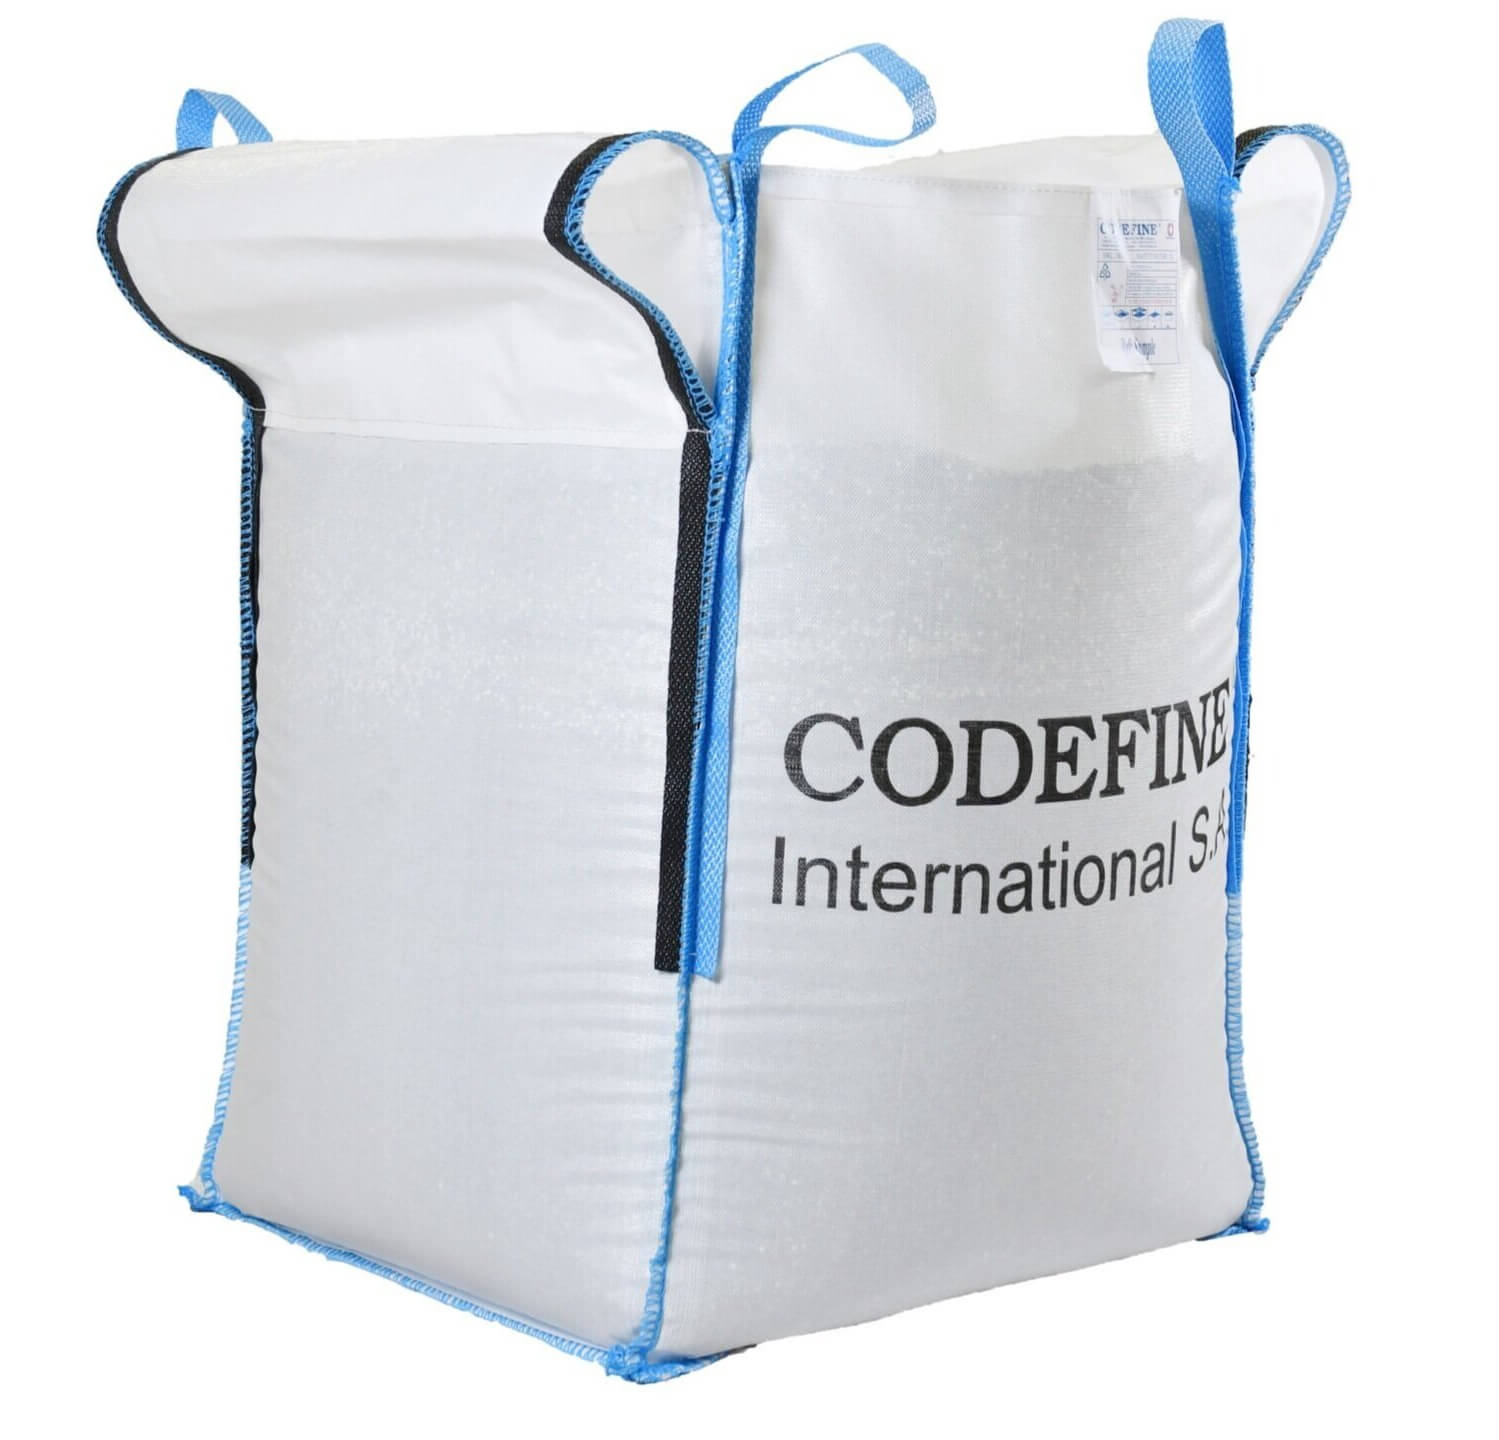 FIBC bags by Codefine